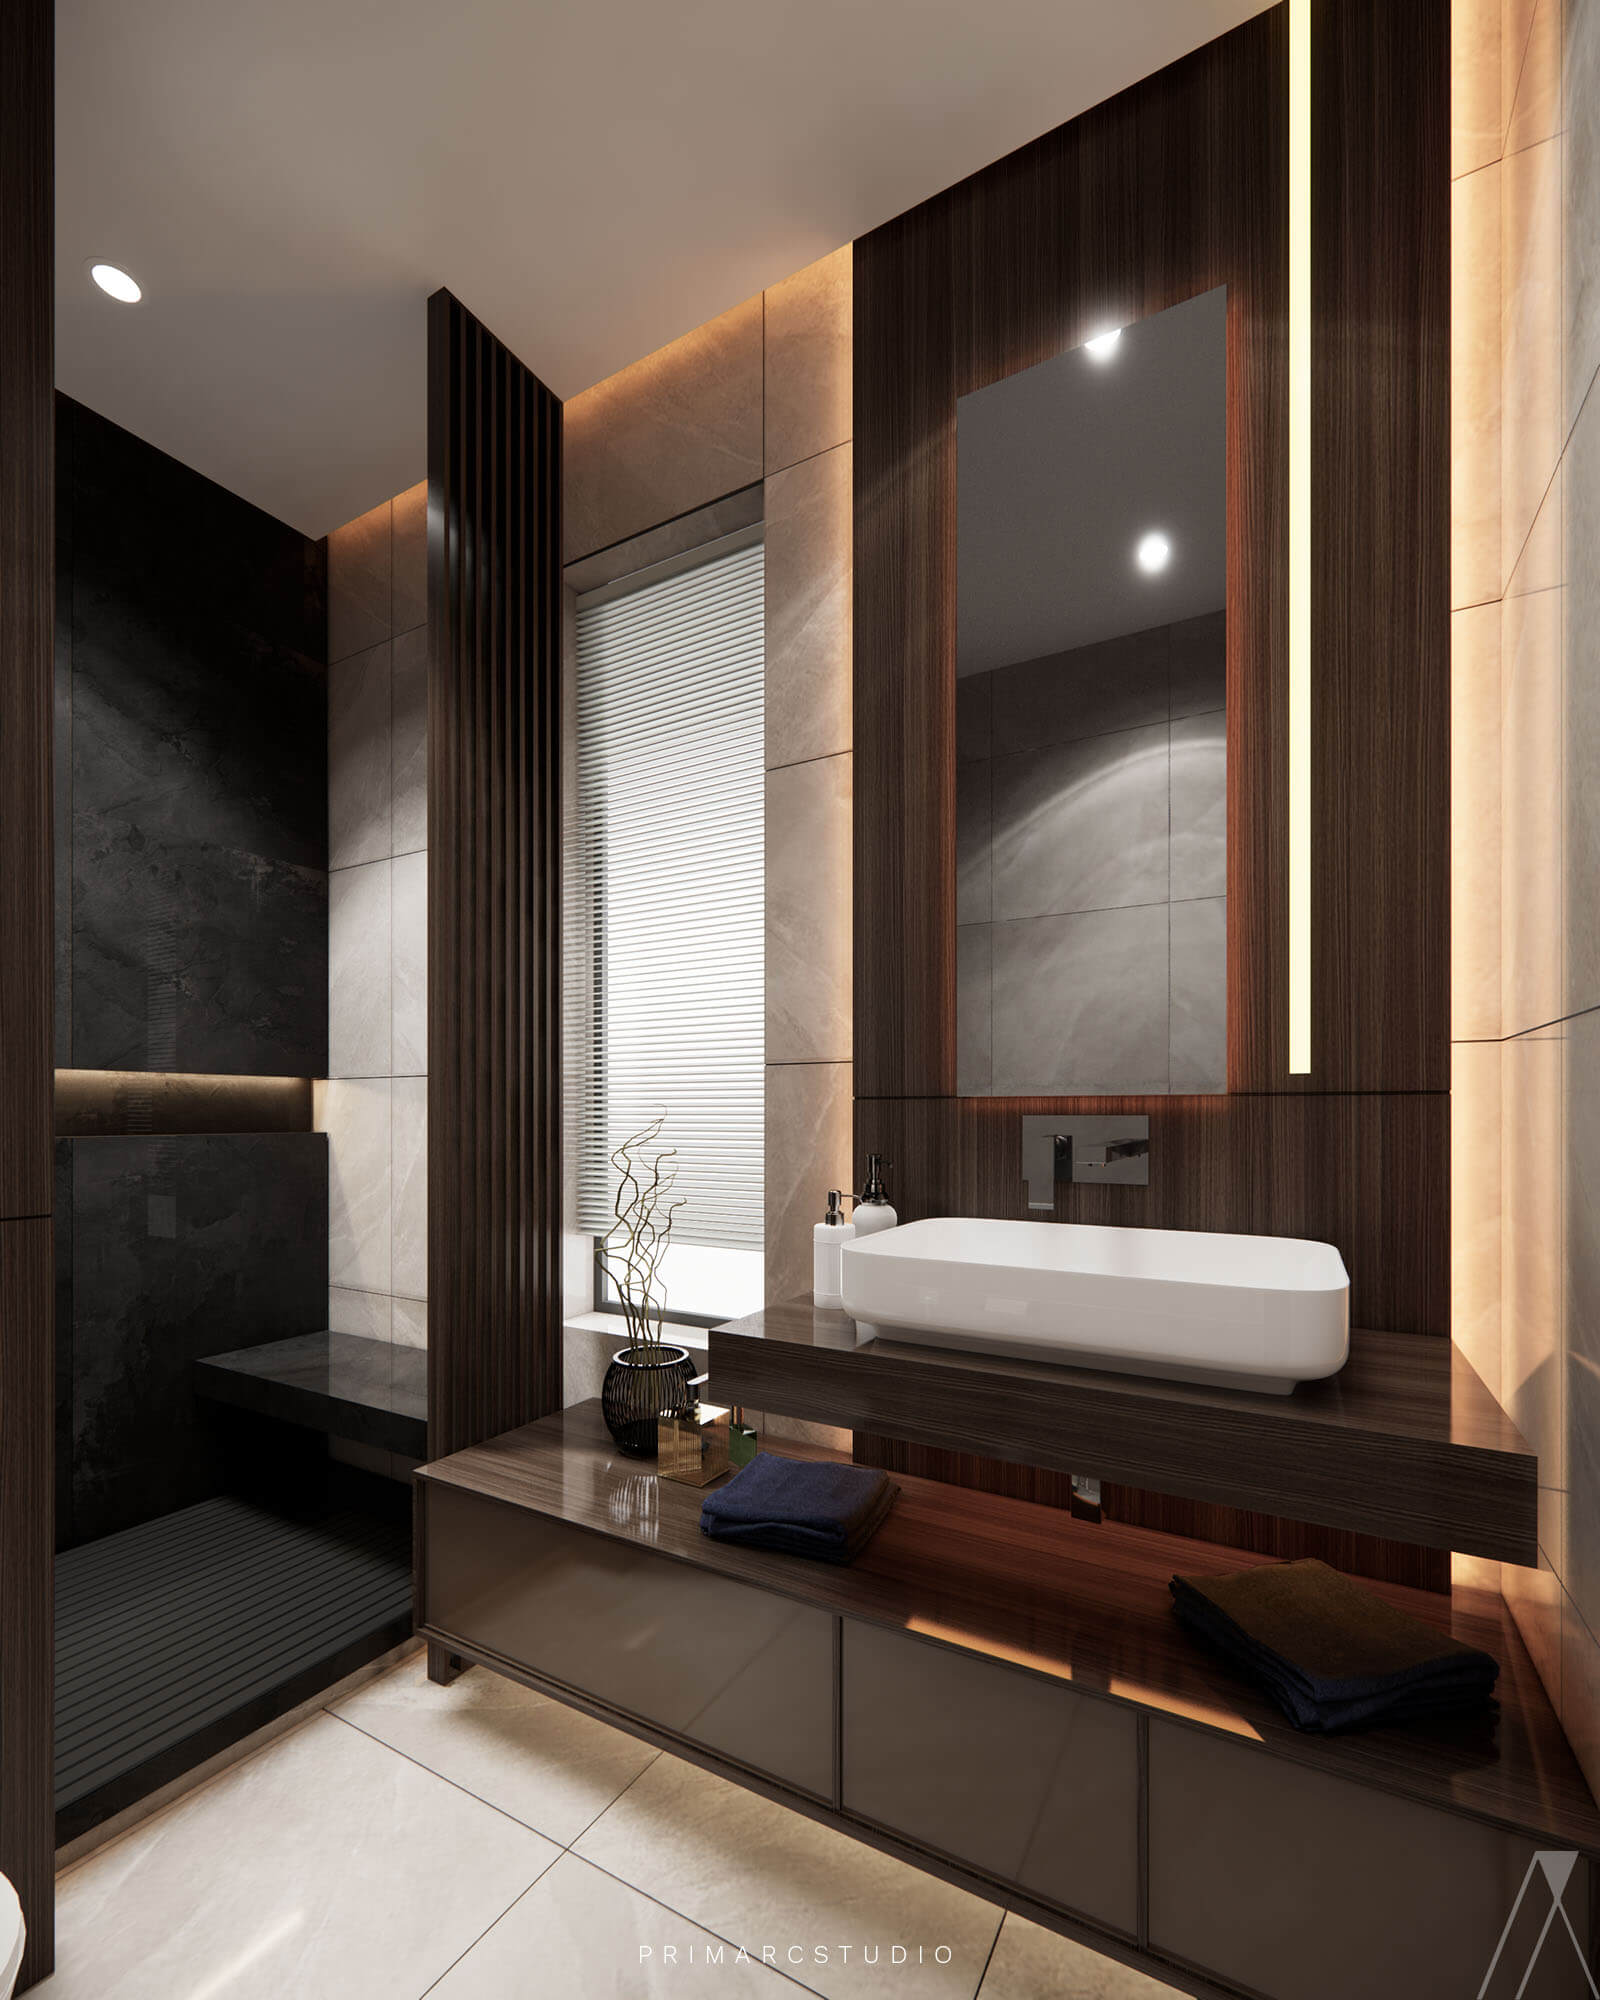 Sink and washroom interior design